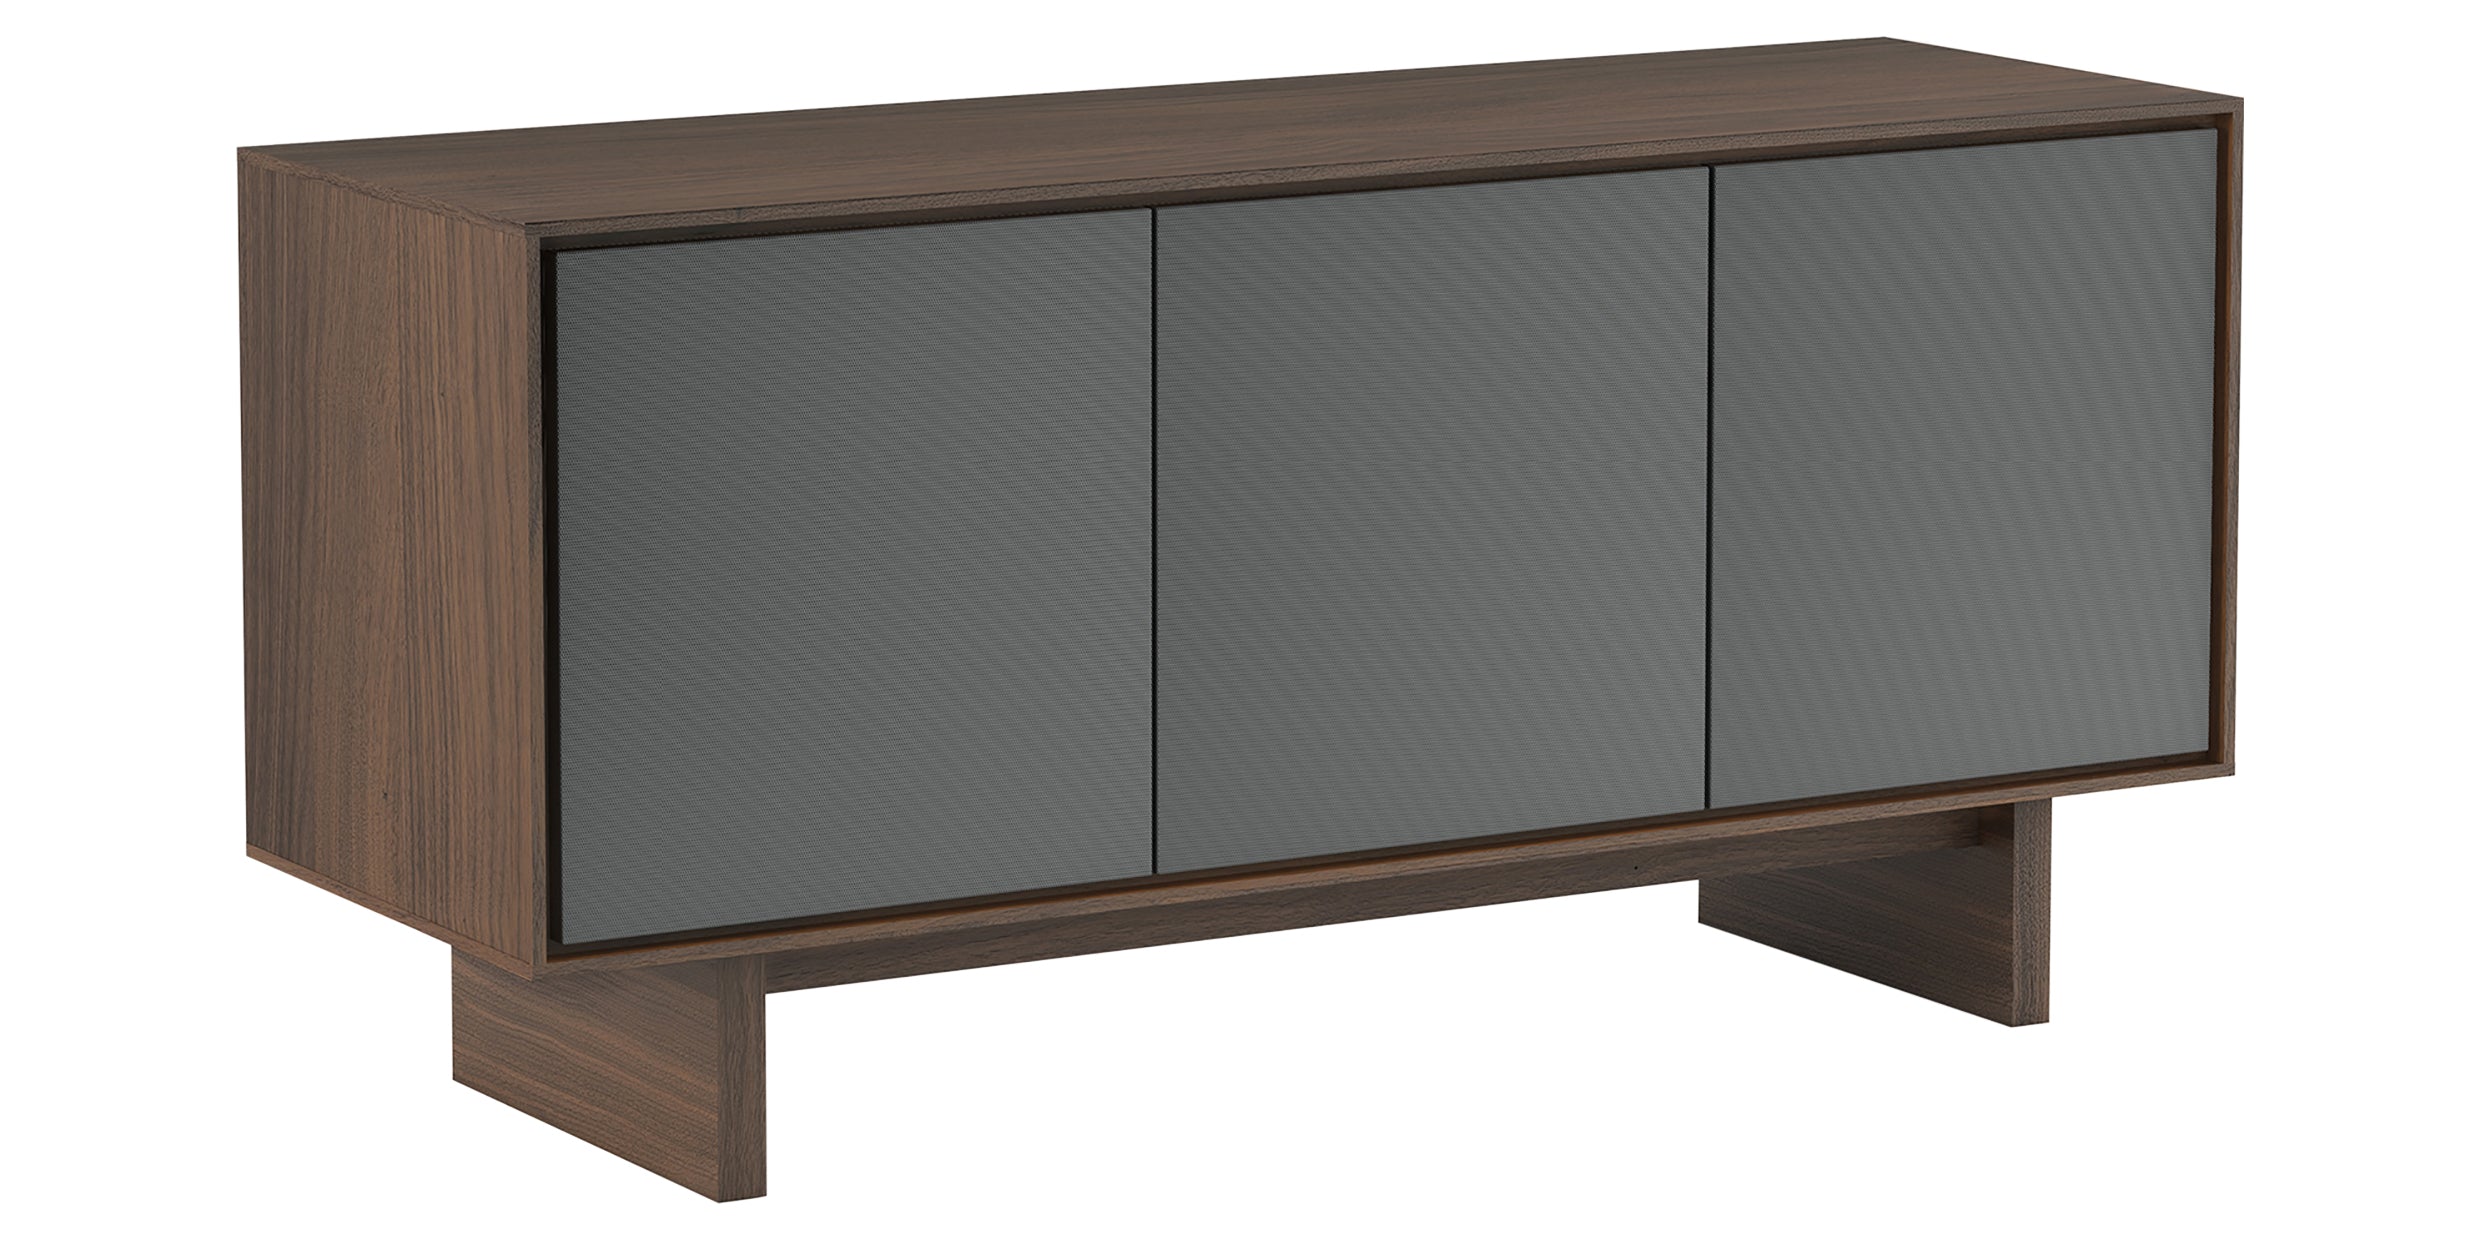 Toasted Walnut Veneer & Grey Perforated Steel | BDI Octave 3 Door Media Cabinet | Valley Ridge Furniture